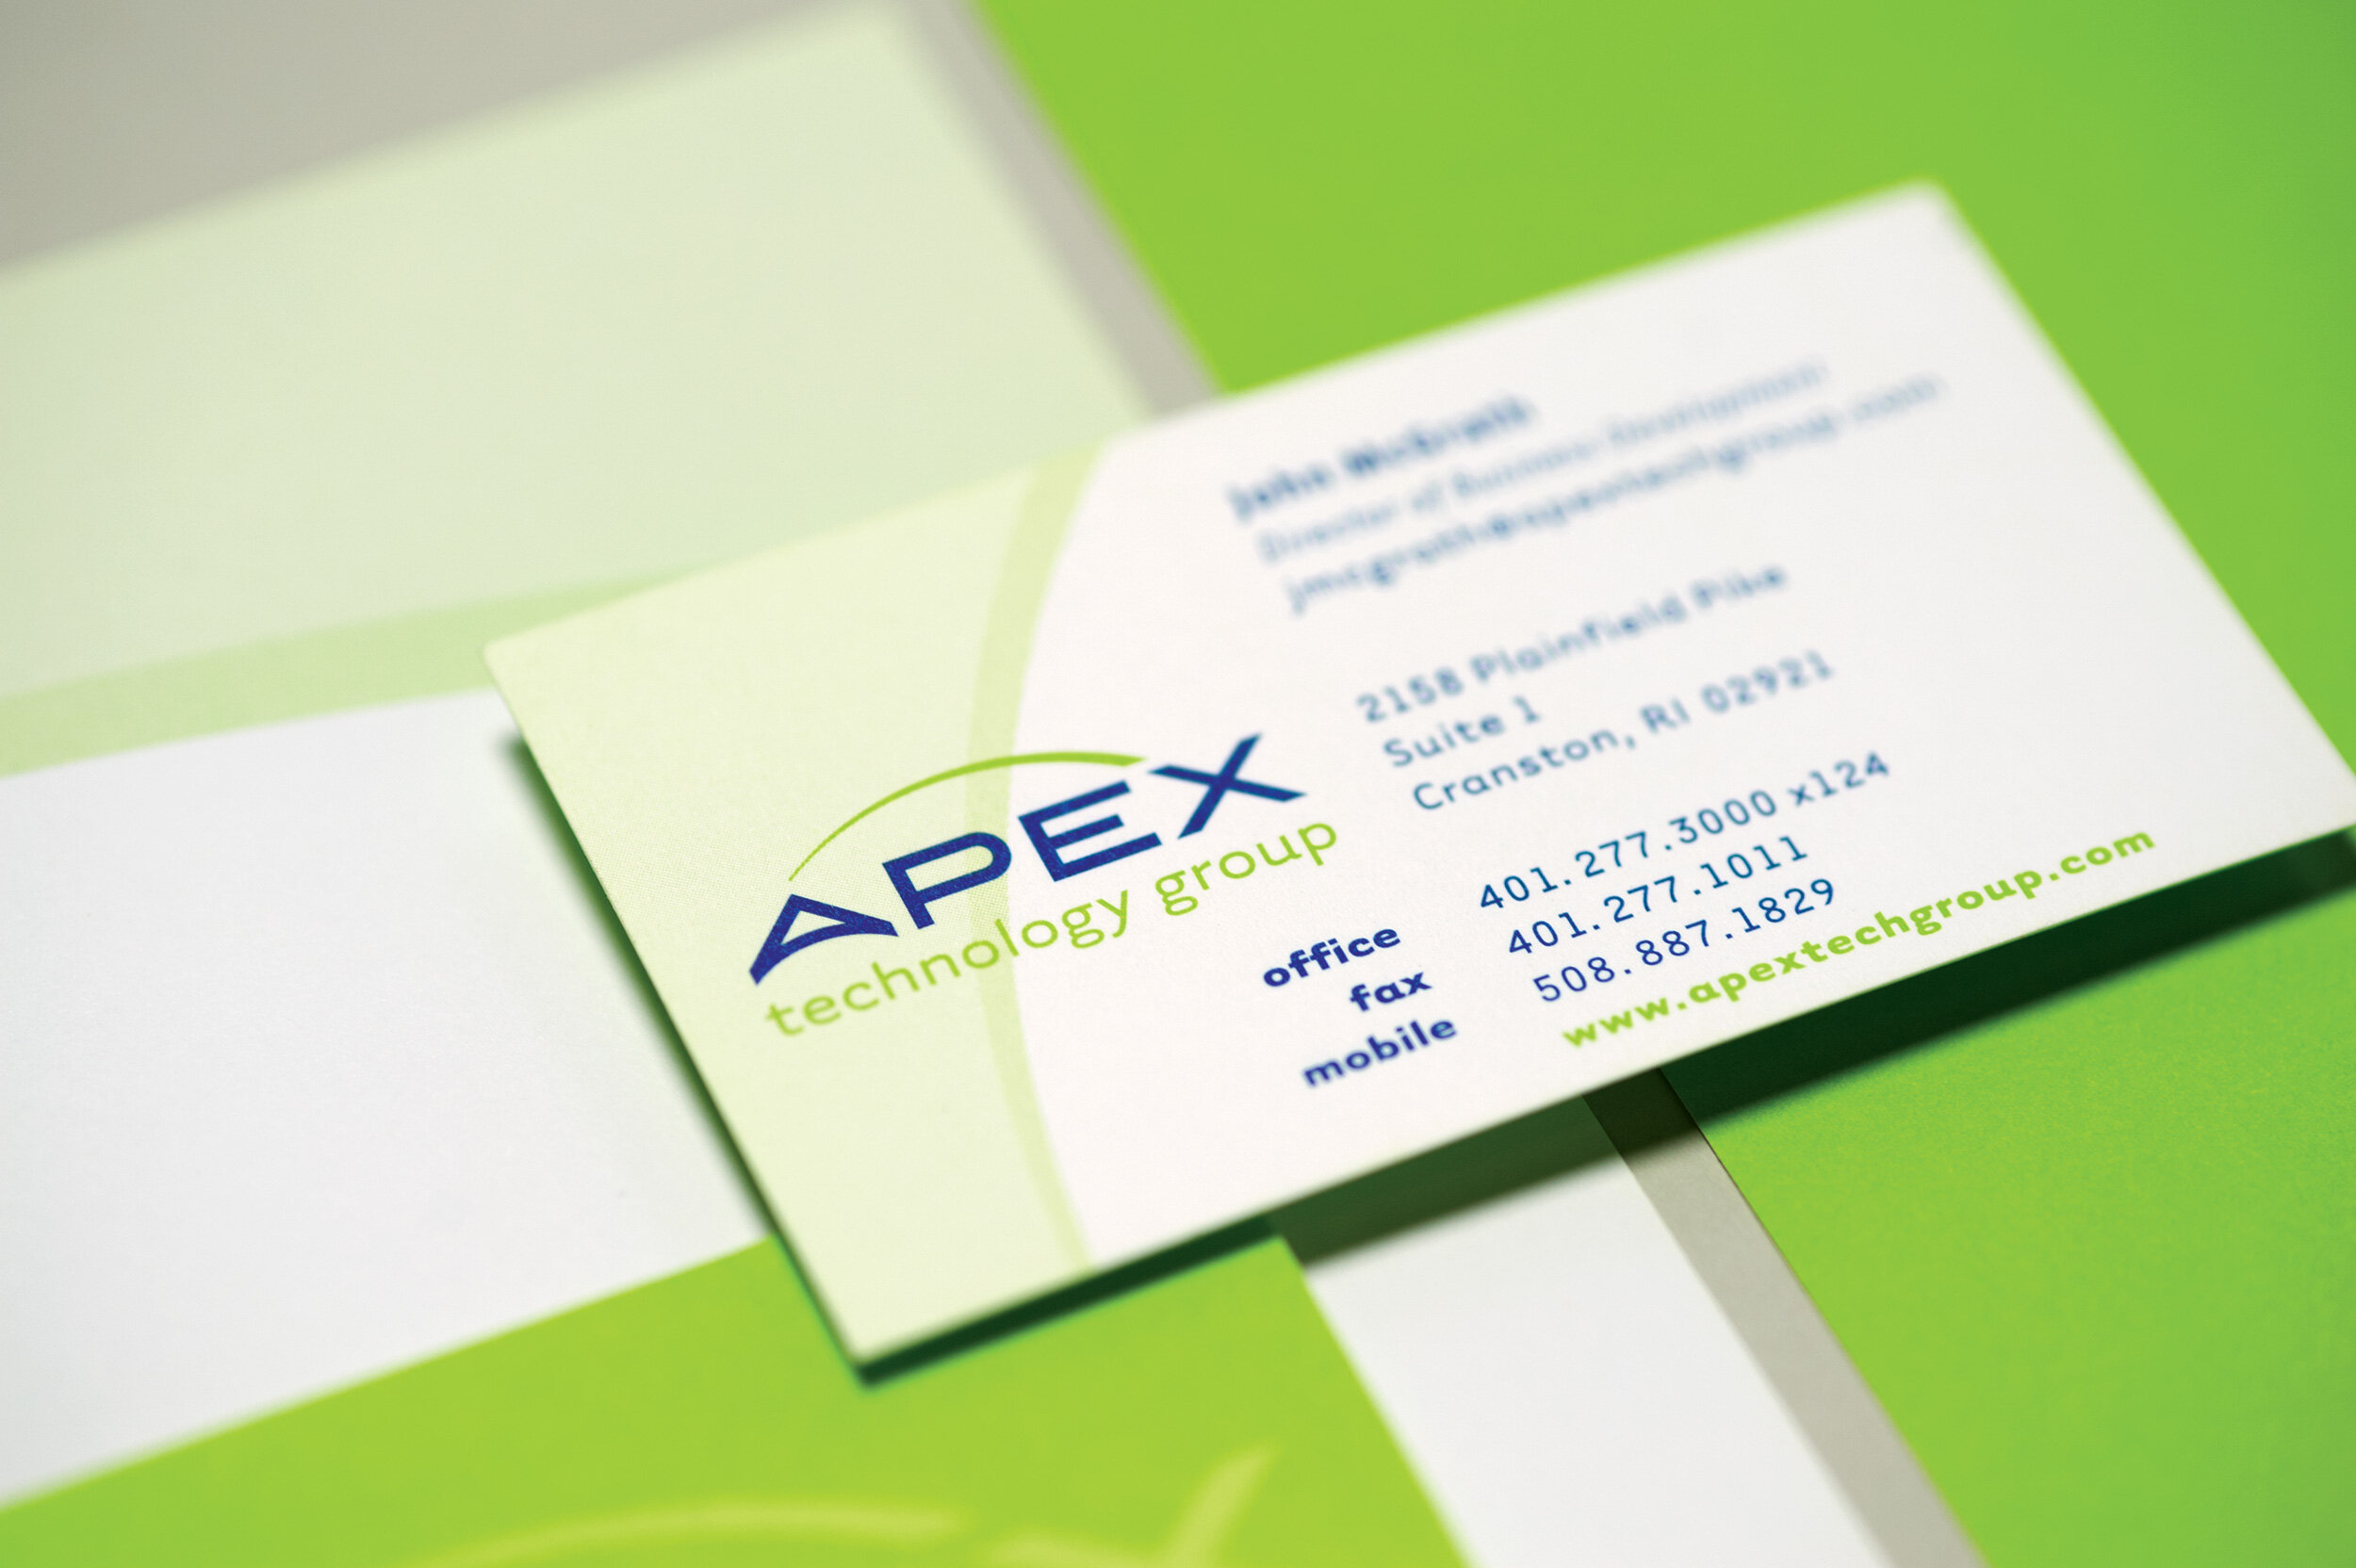   Apex Technology Group  • designer/director: Michael Balint  •   assistant designer:  Dawn Vietro 